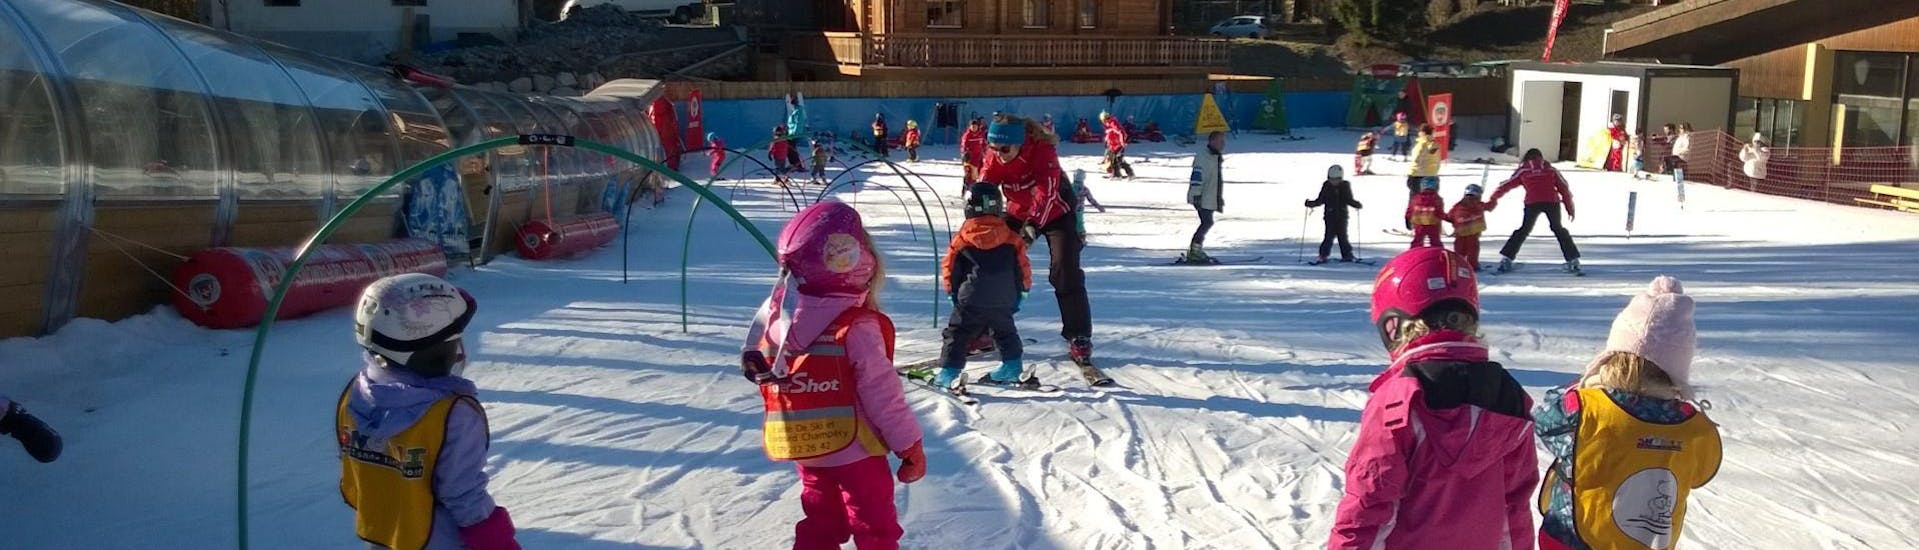 Lezioni di sci per bambini "Kids Club" (3-7 anni).